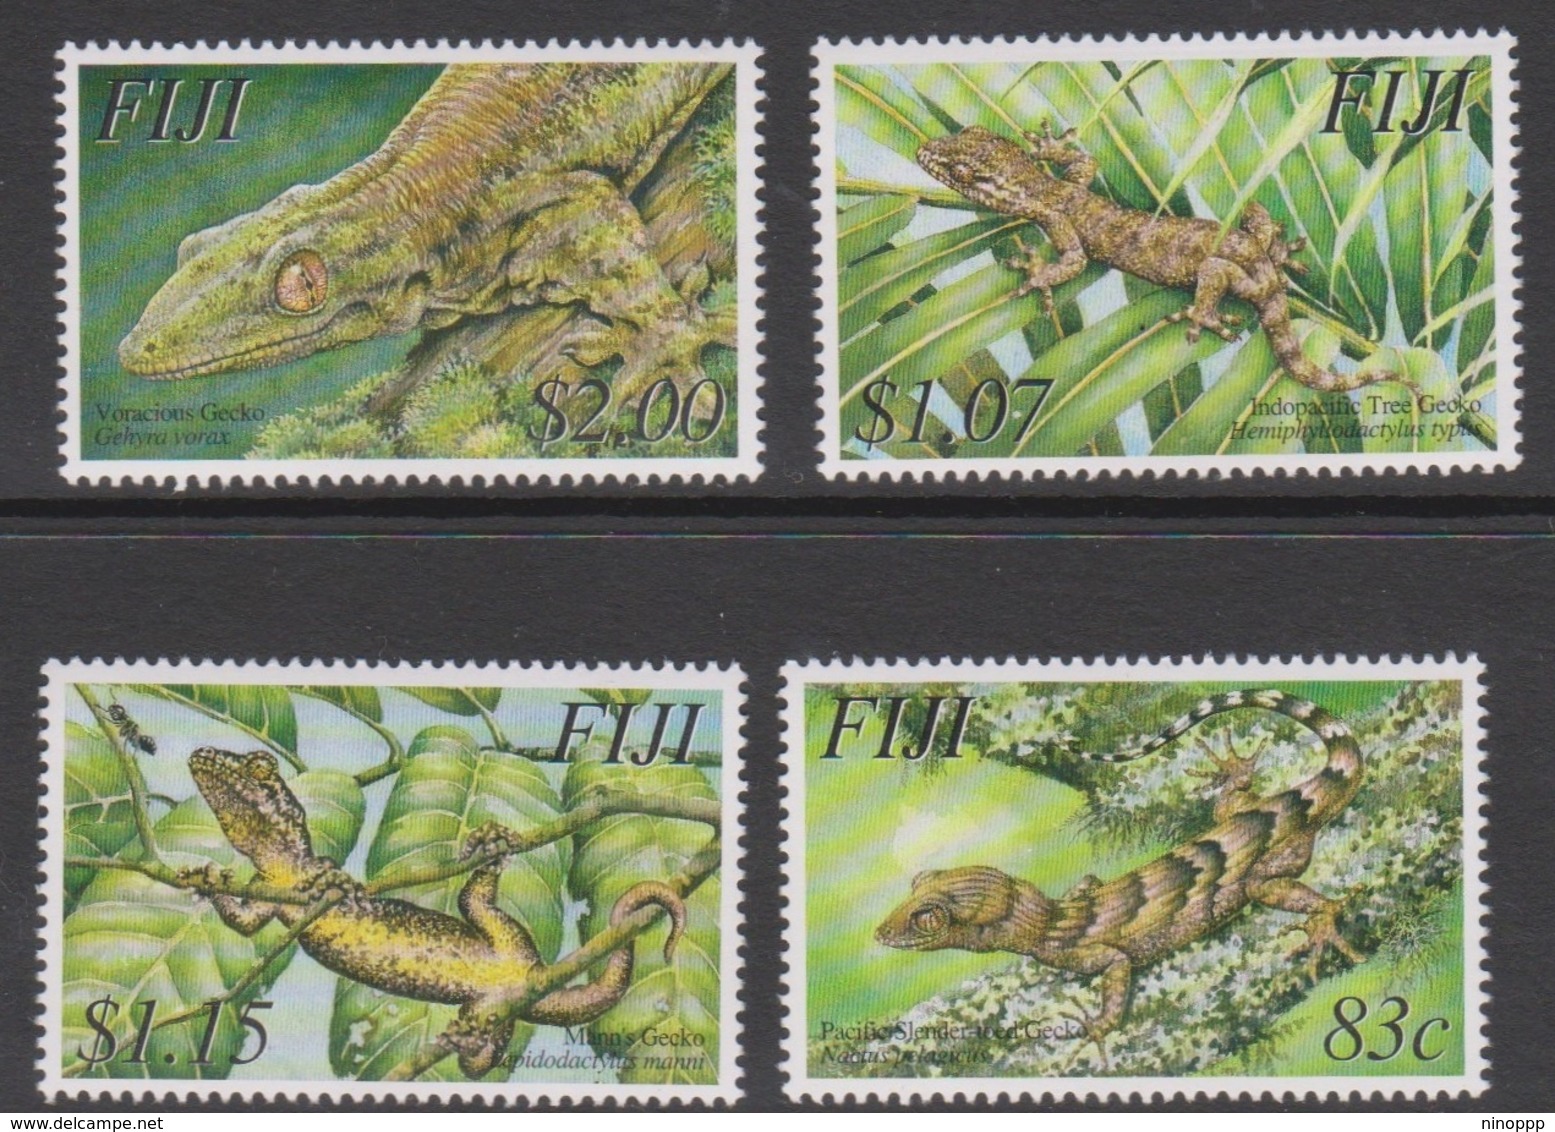 Fiji SG 1204-1207 2003 Geckos, Mint Never Hinged - Fiji (1970-...)